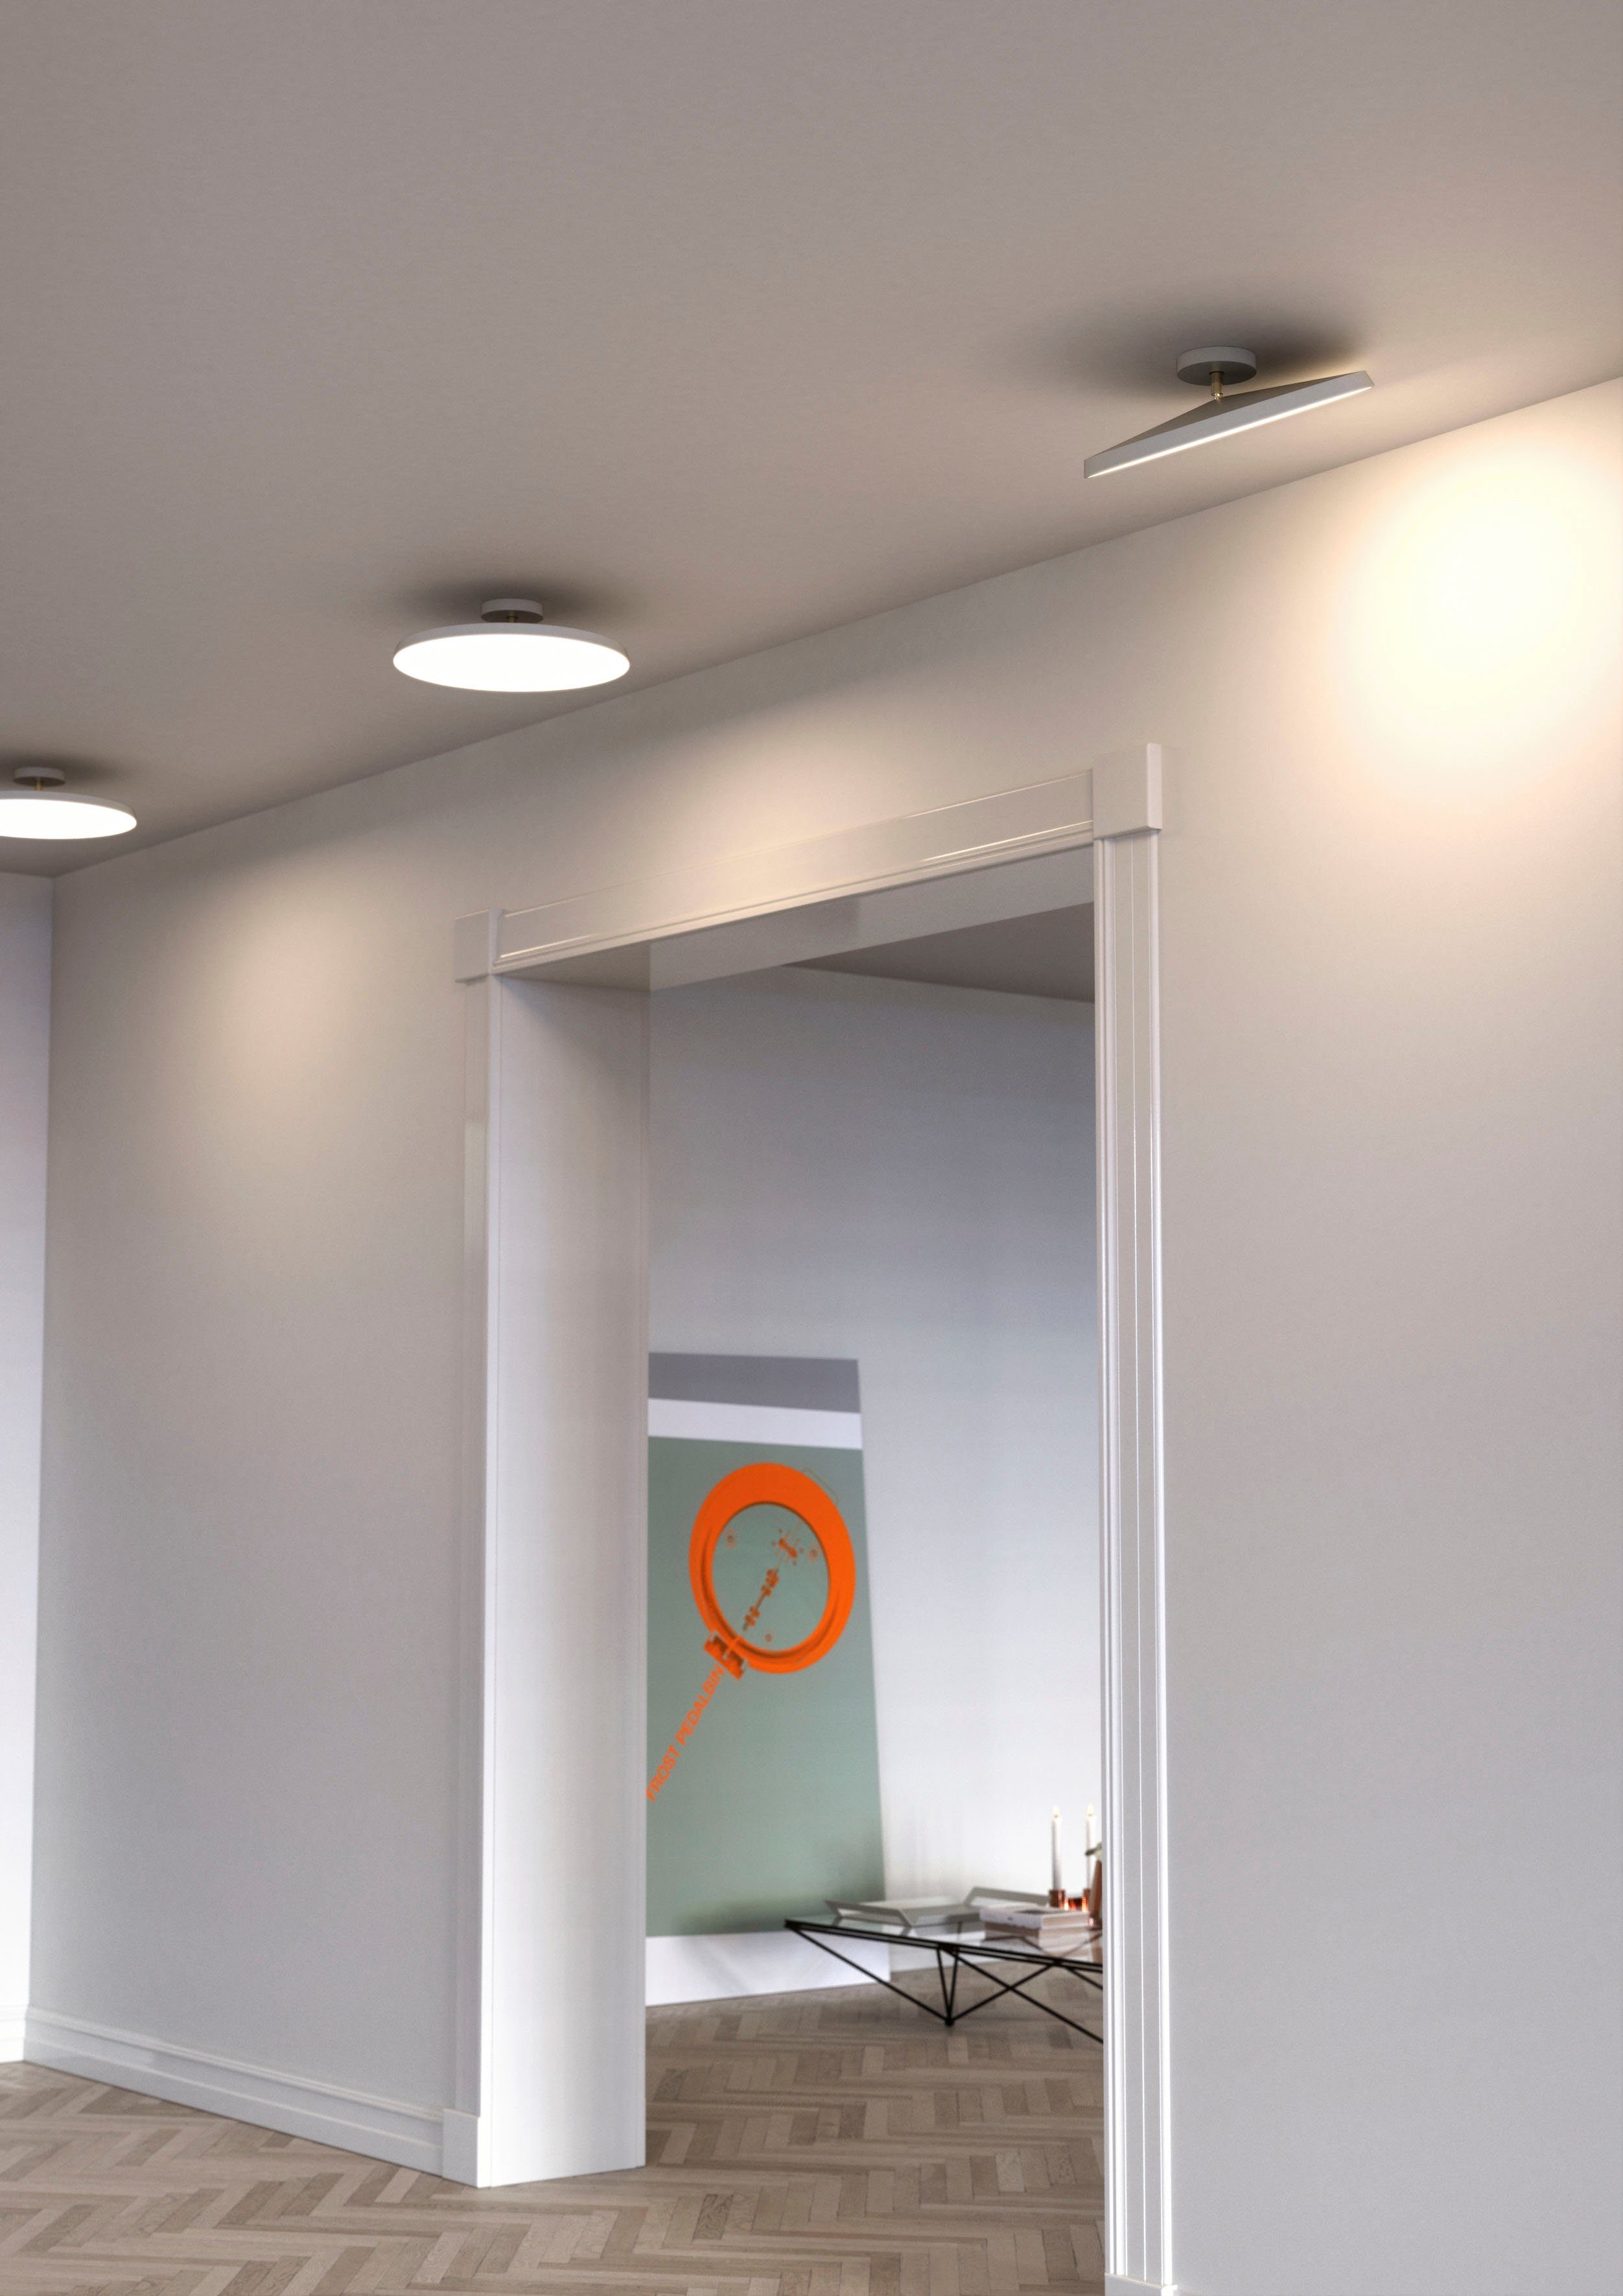 Kaito Kopf, design Pro, hochwertige people fest LED the Inkl. fest Deckenleuchte Warmweiß, integriert, for LED schwenkbarer LED, verbaute Verarbeitung